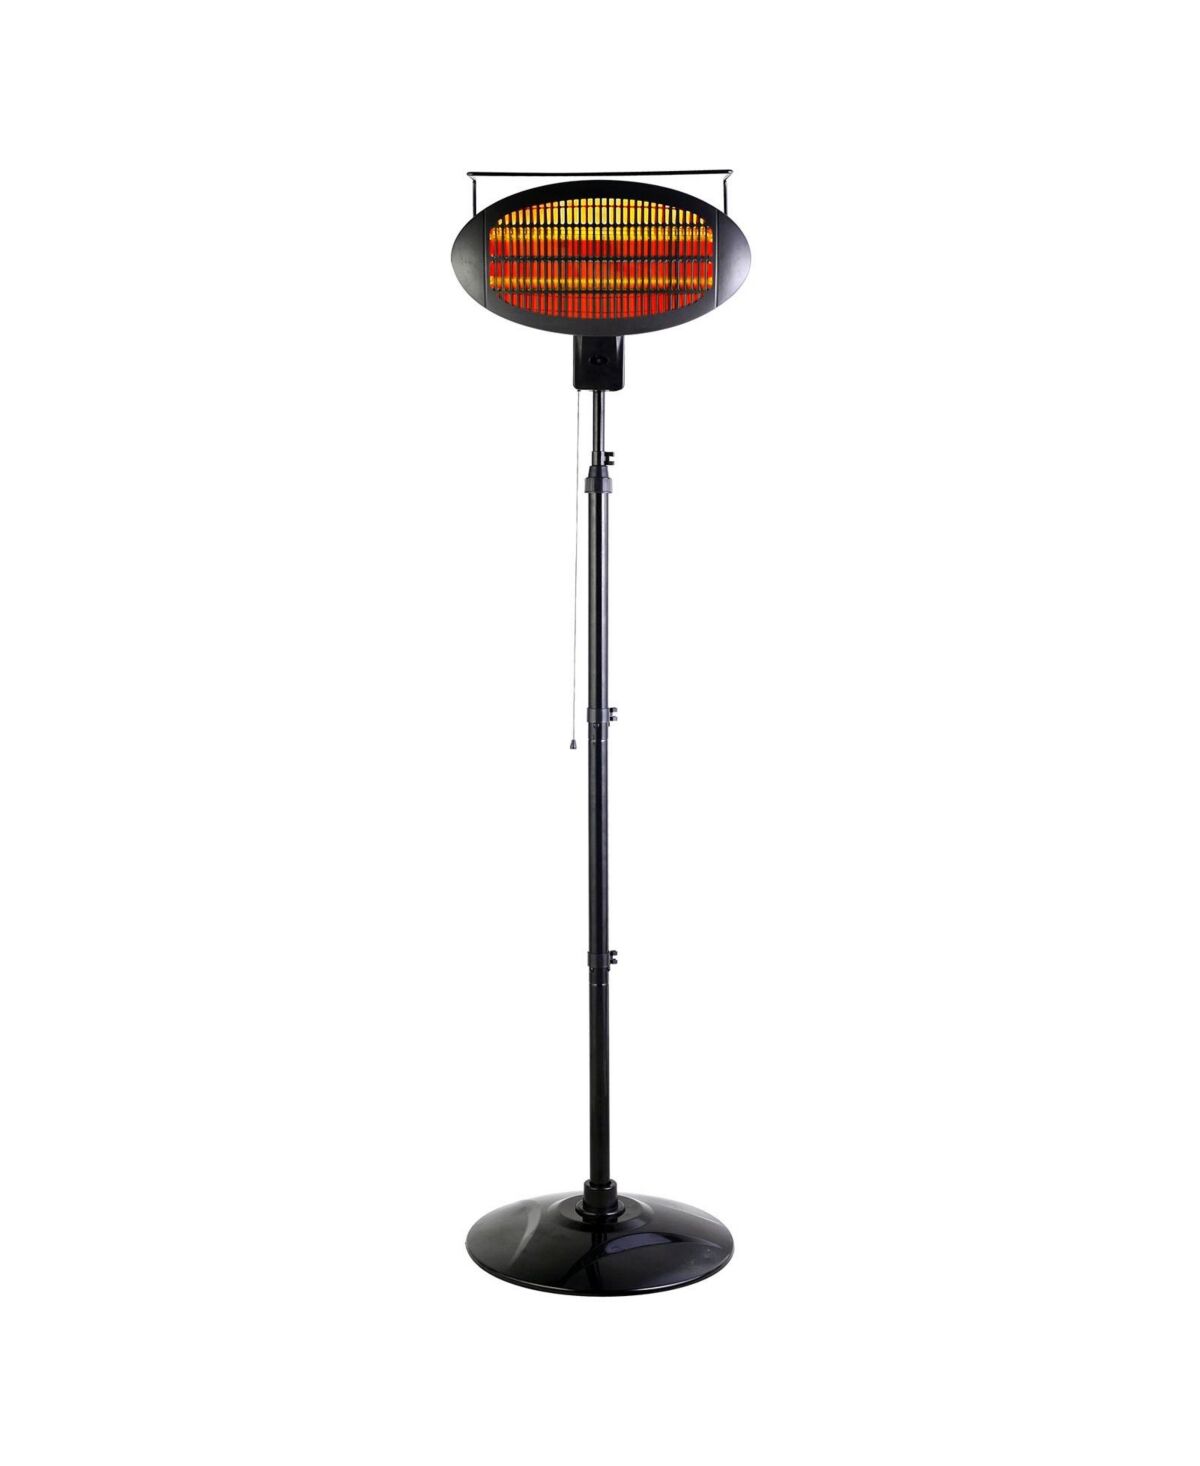 Optimus Garage-Outdoor Floor Standing Infrared Patio Heater with Remote - Black